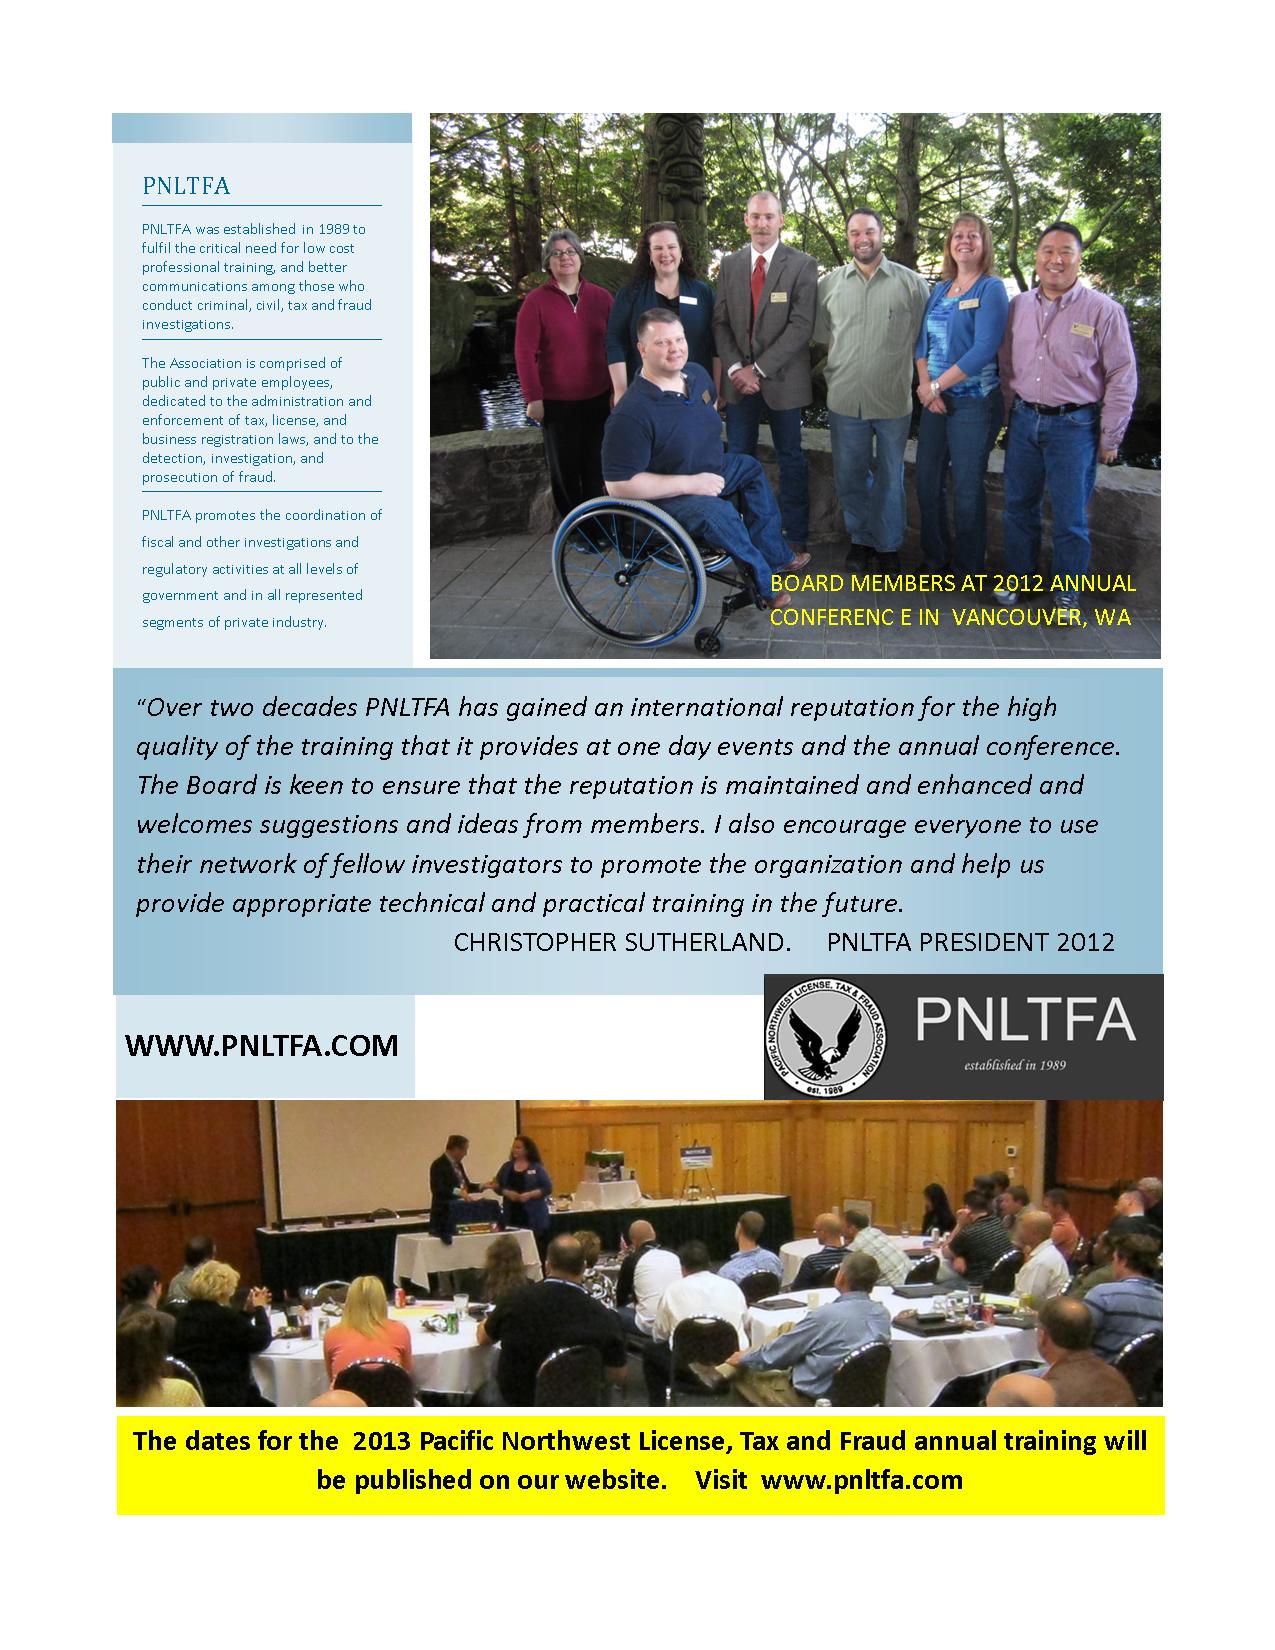 2012 pnltfa briefing sheet -4